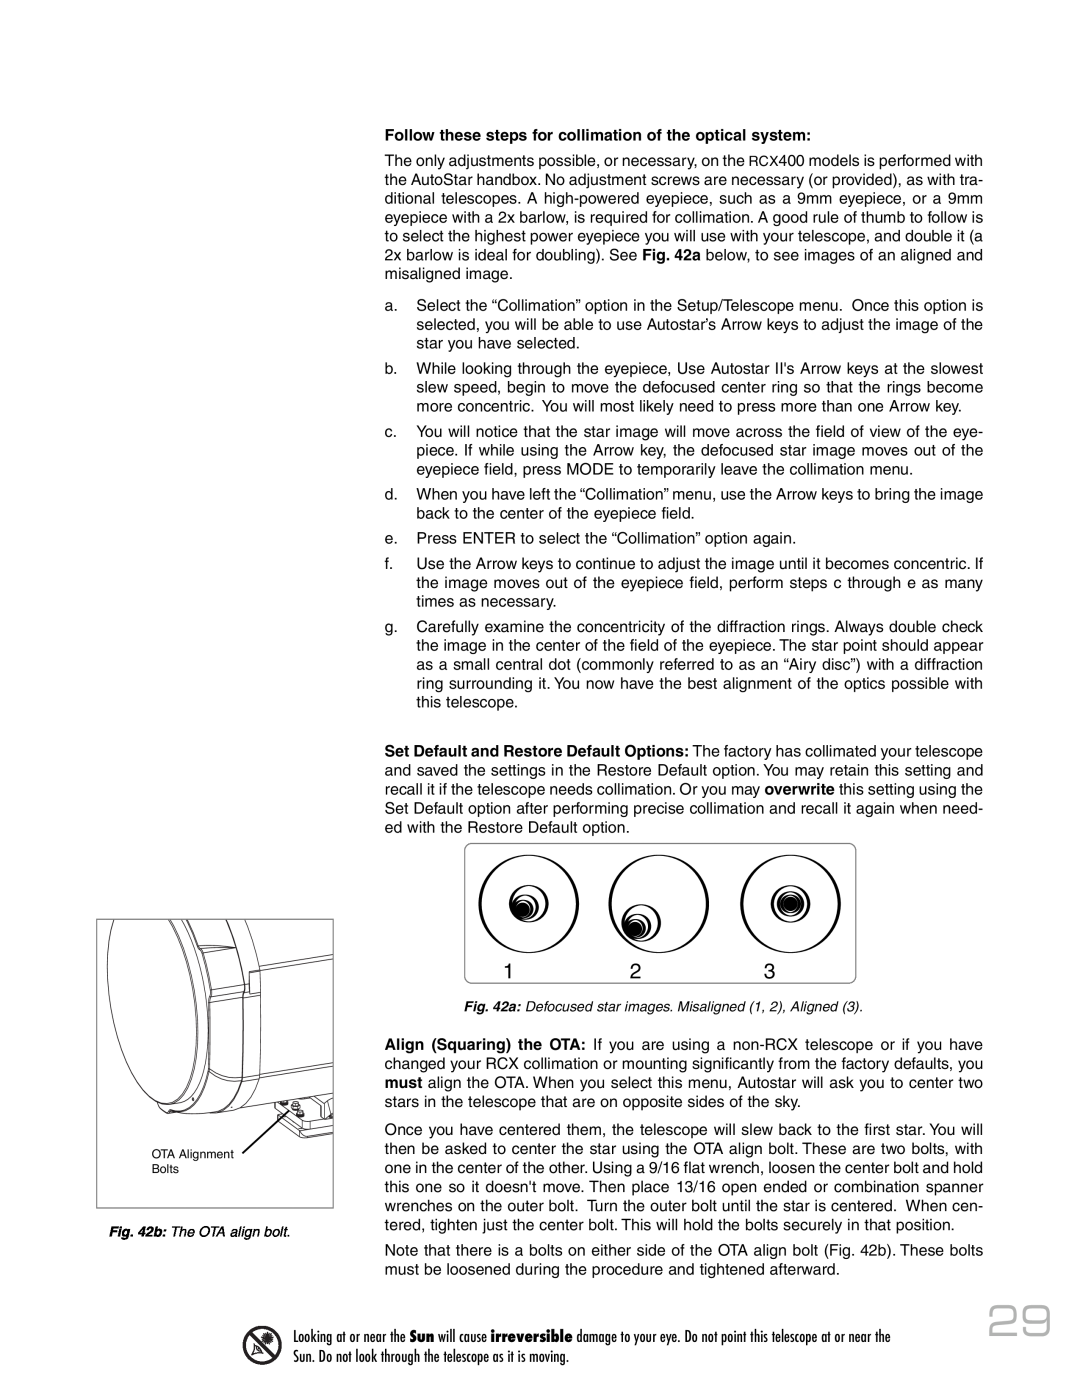 Meade RCX400 instruction manual b The OTA align bolt, OTA Alignment, Bolts 